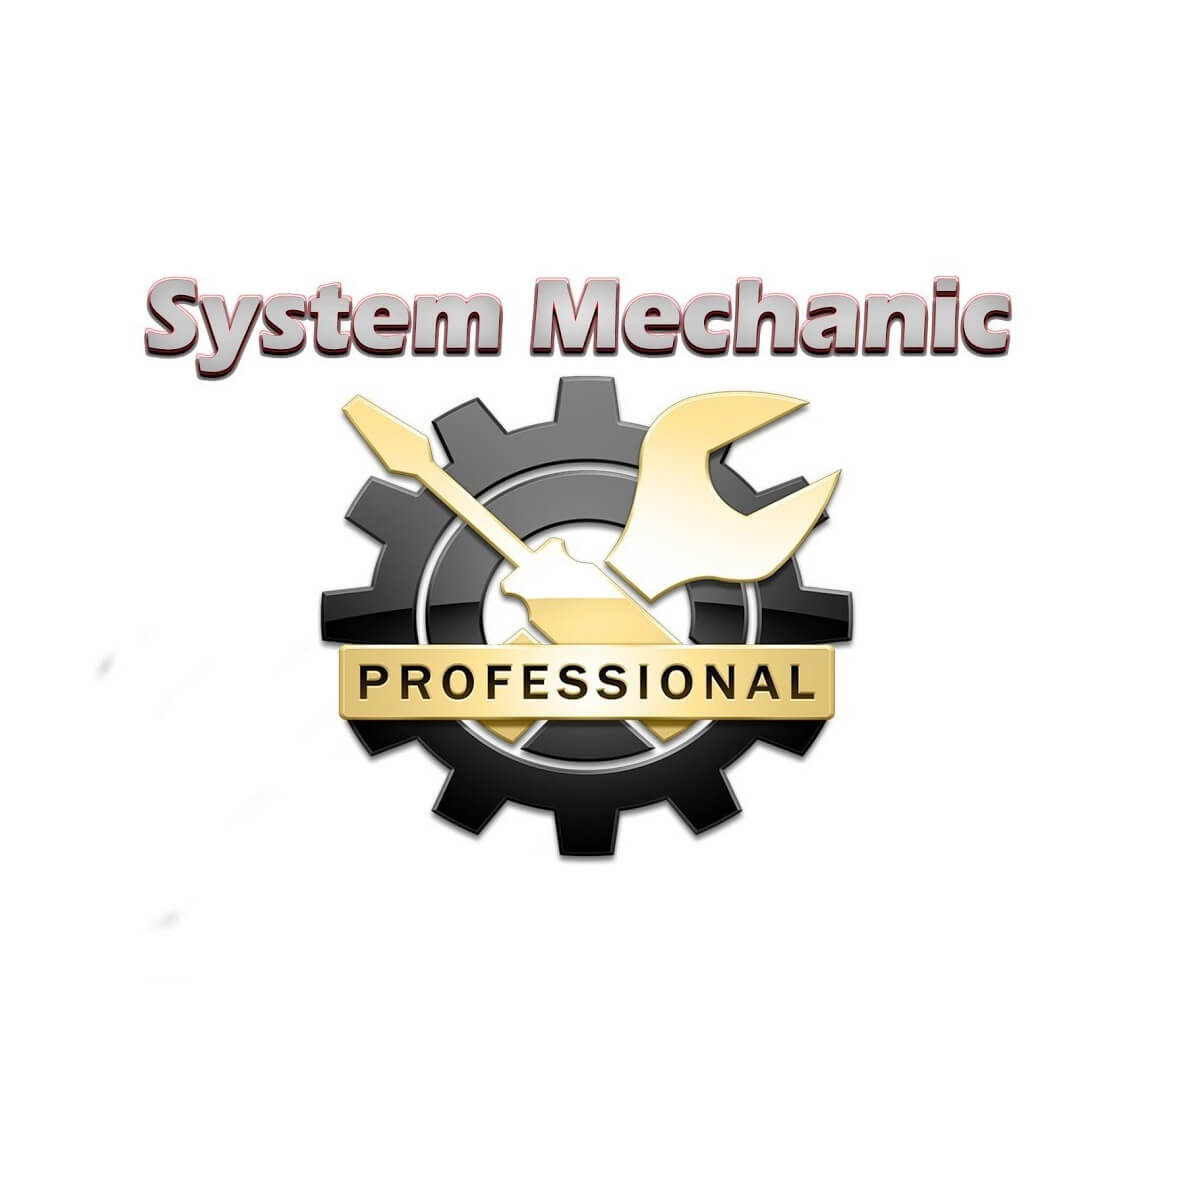 latest version of system mechanic